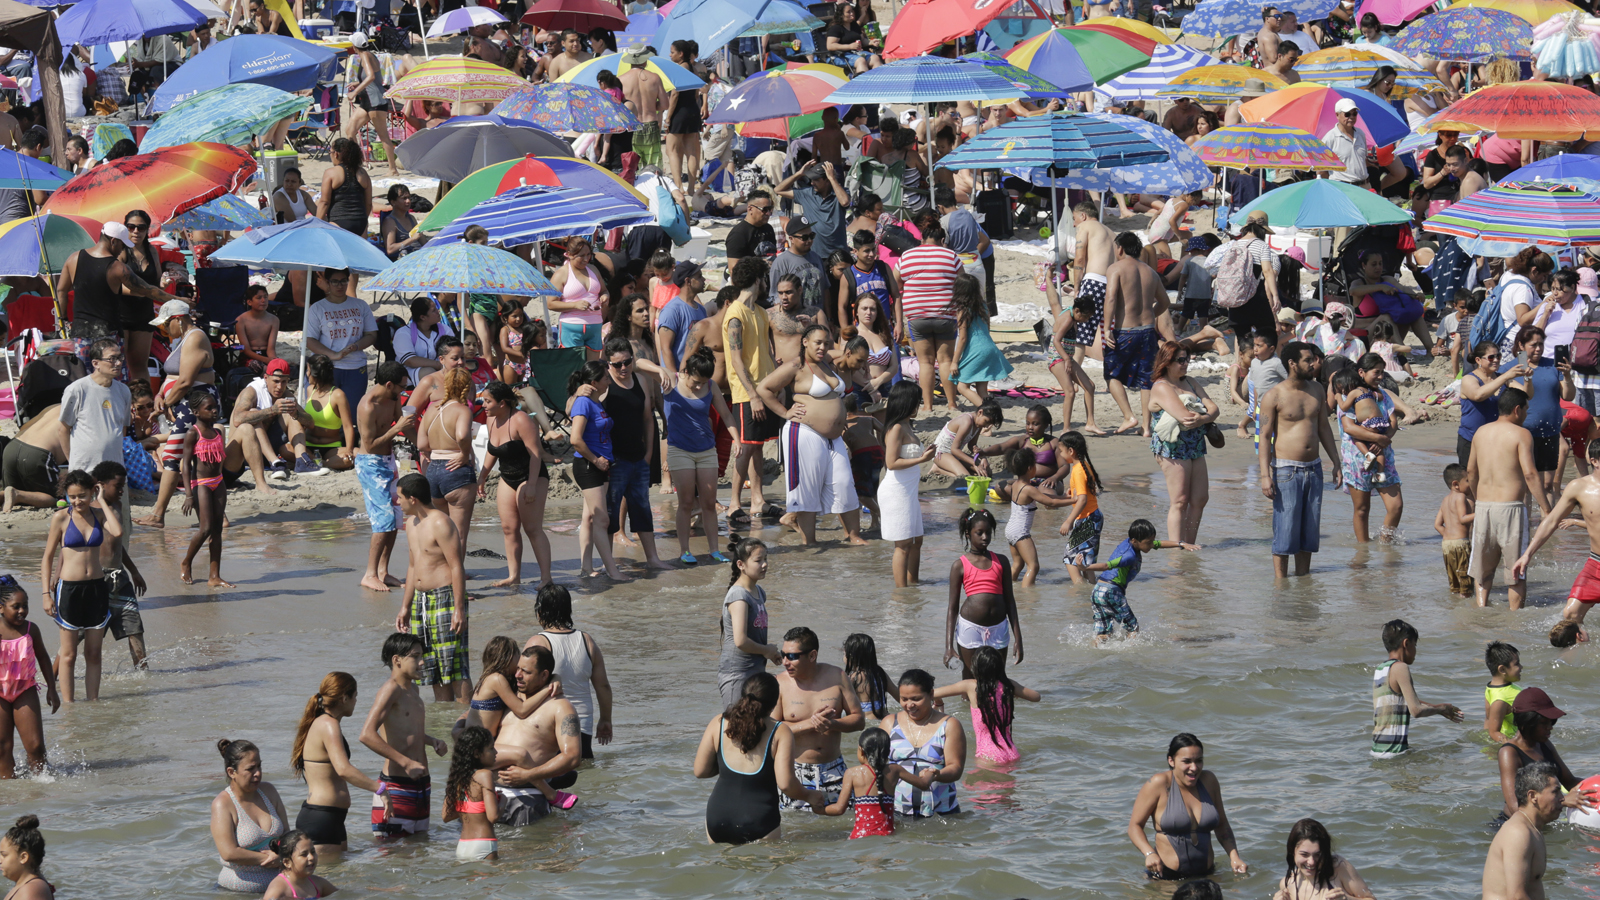 Nude Mixed Gender Teens At Beach